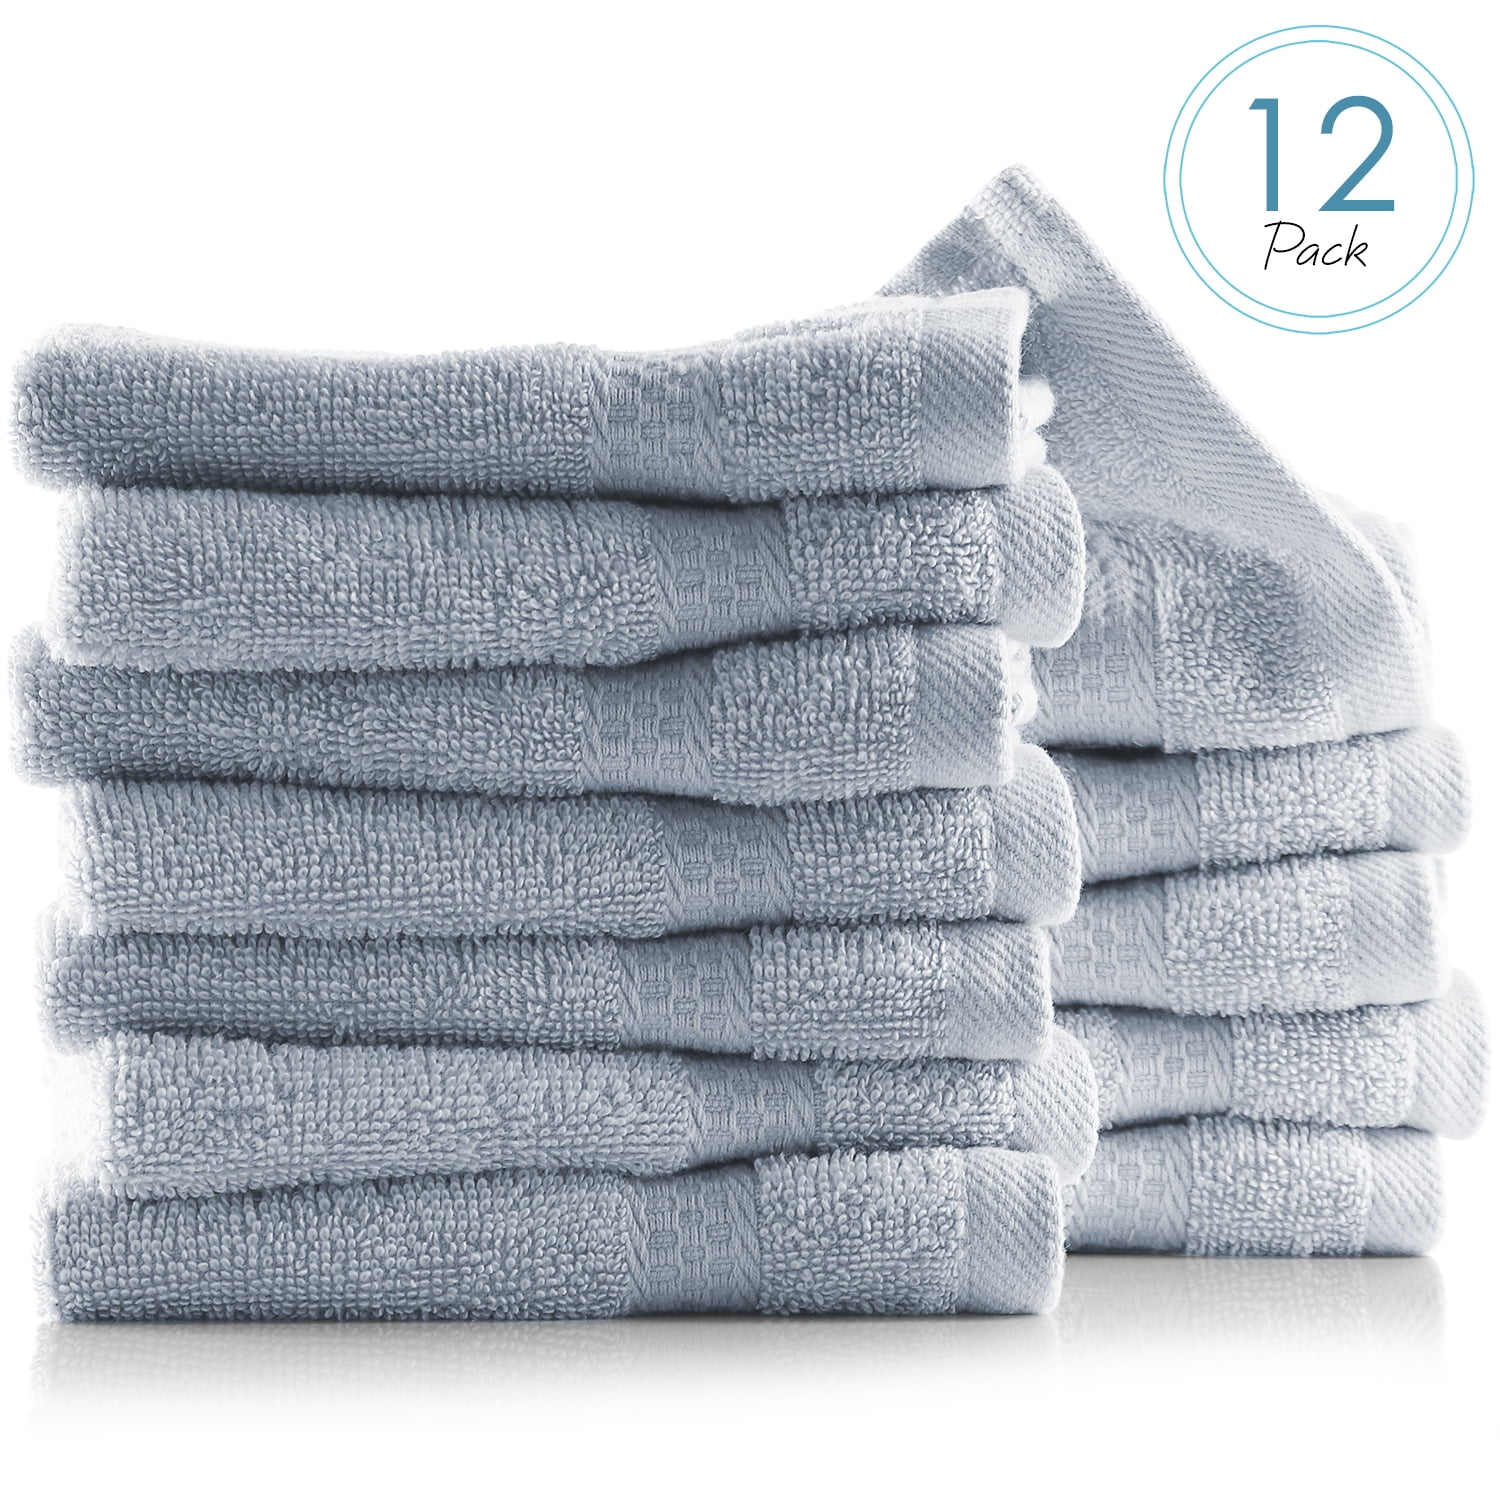 100% Combed Cotton Towels Soft Face Hand Bath Towel Sheet Teal, Bath Towel 